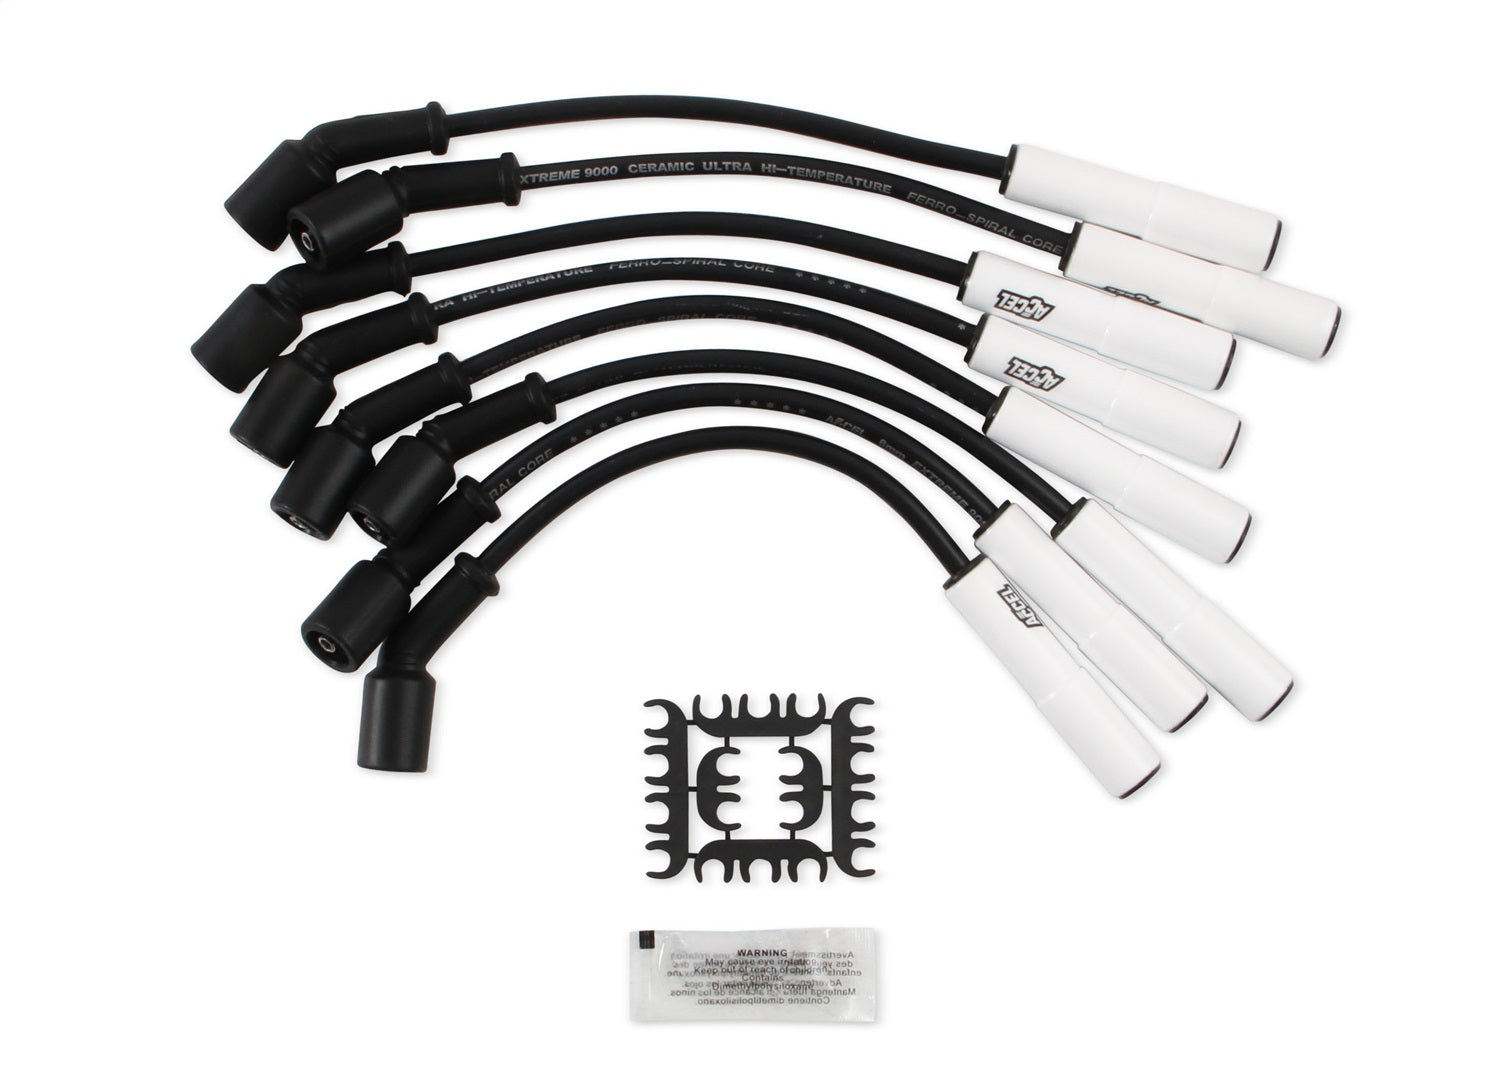 Accel 9070CK Spark Plug Wire Set, Extreme 9000 Ceramic, Spiral